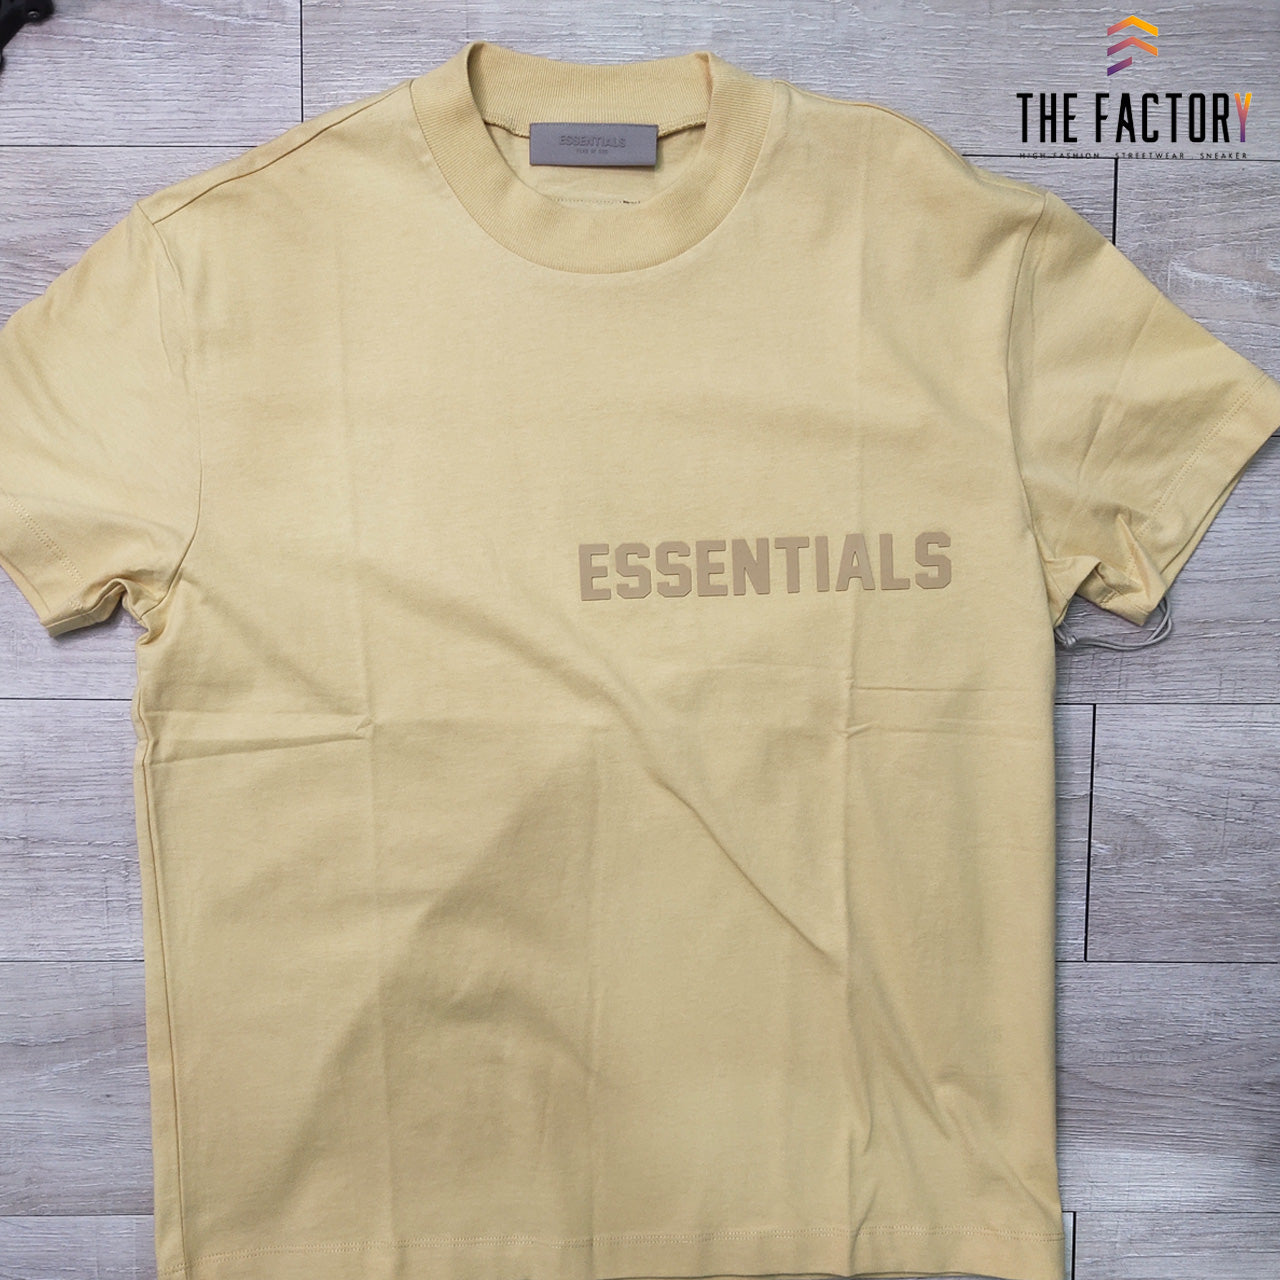 Fear of God - Essentials T-Shirt SS23 (Light Tusca)